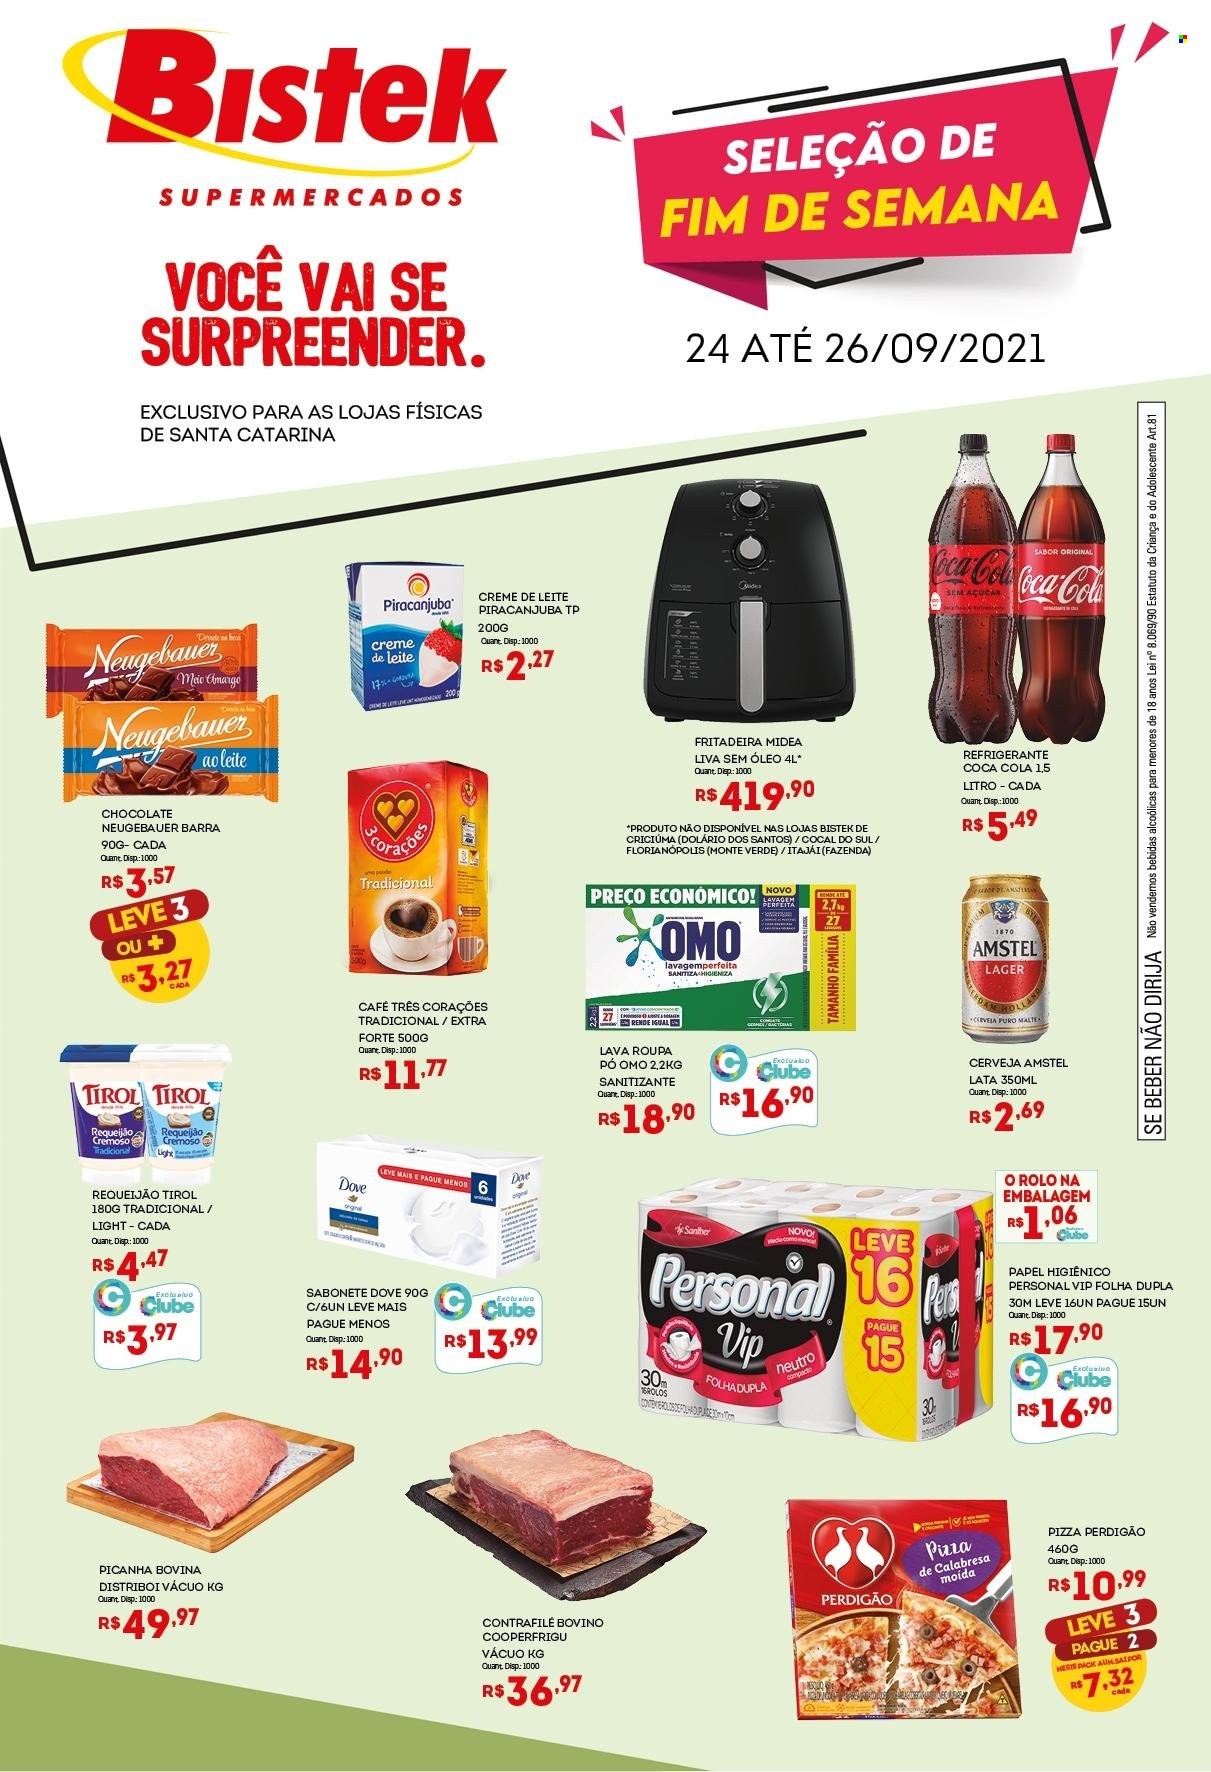 Encarte Bistek Supermercados  - 24.09.2021 - 26.09.2021.